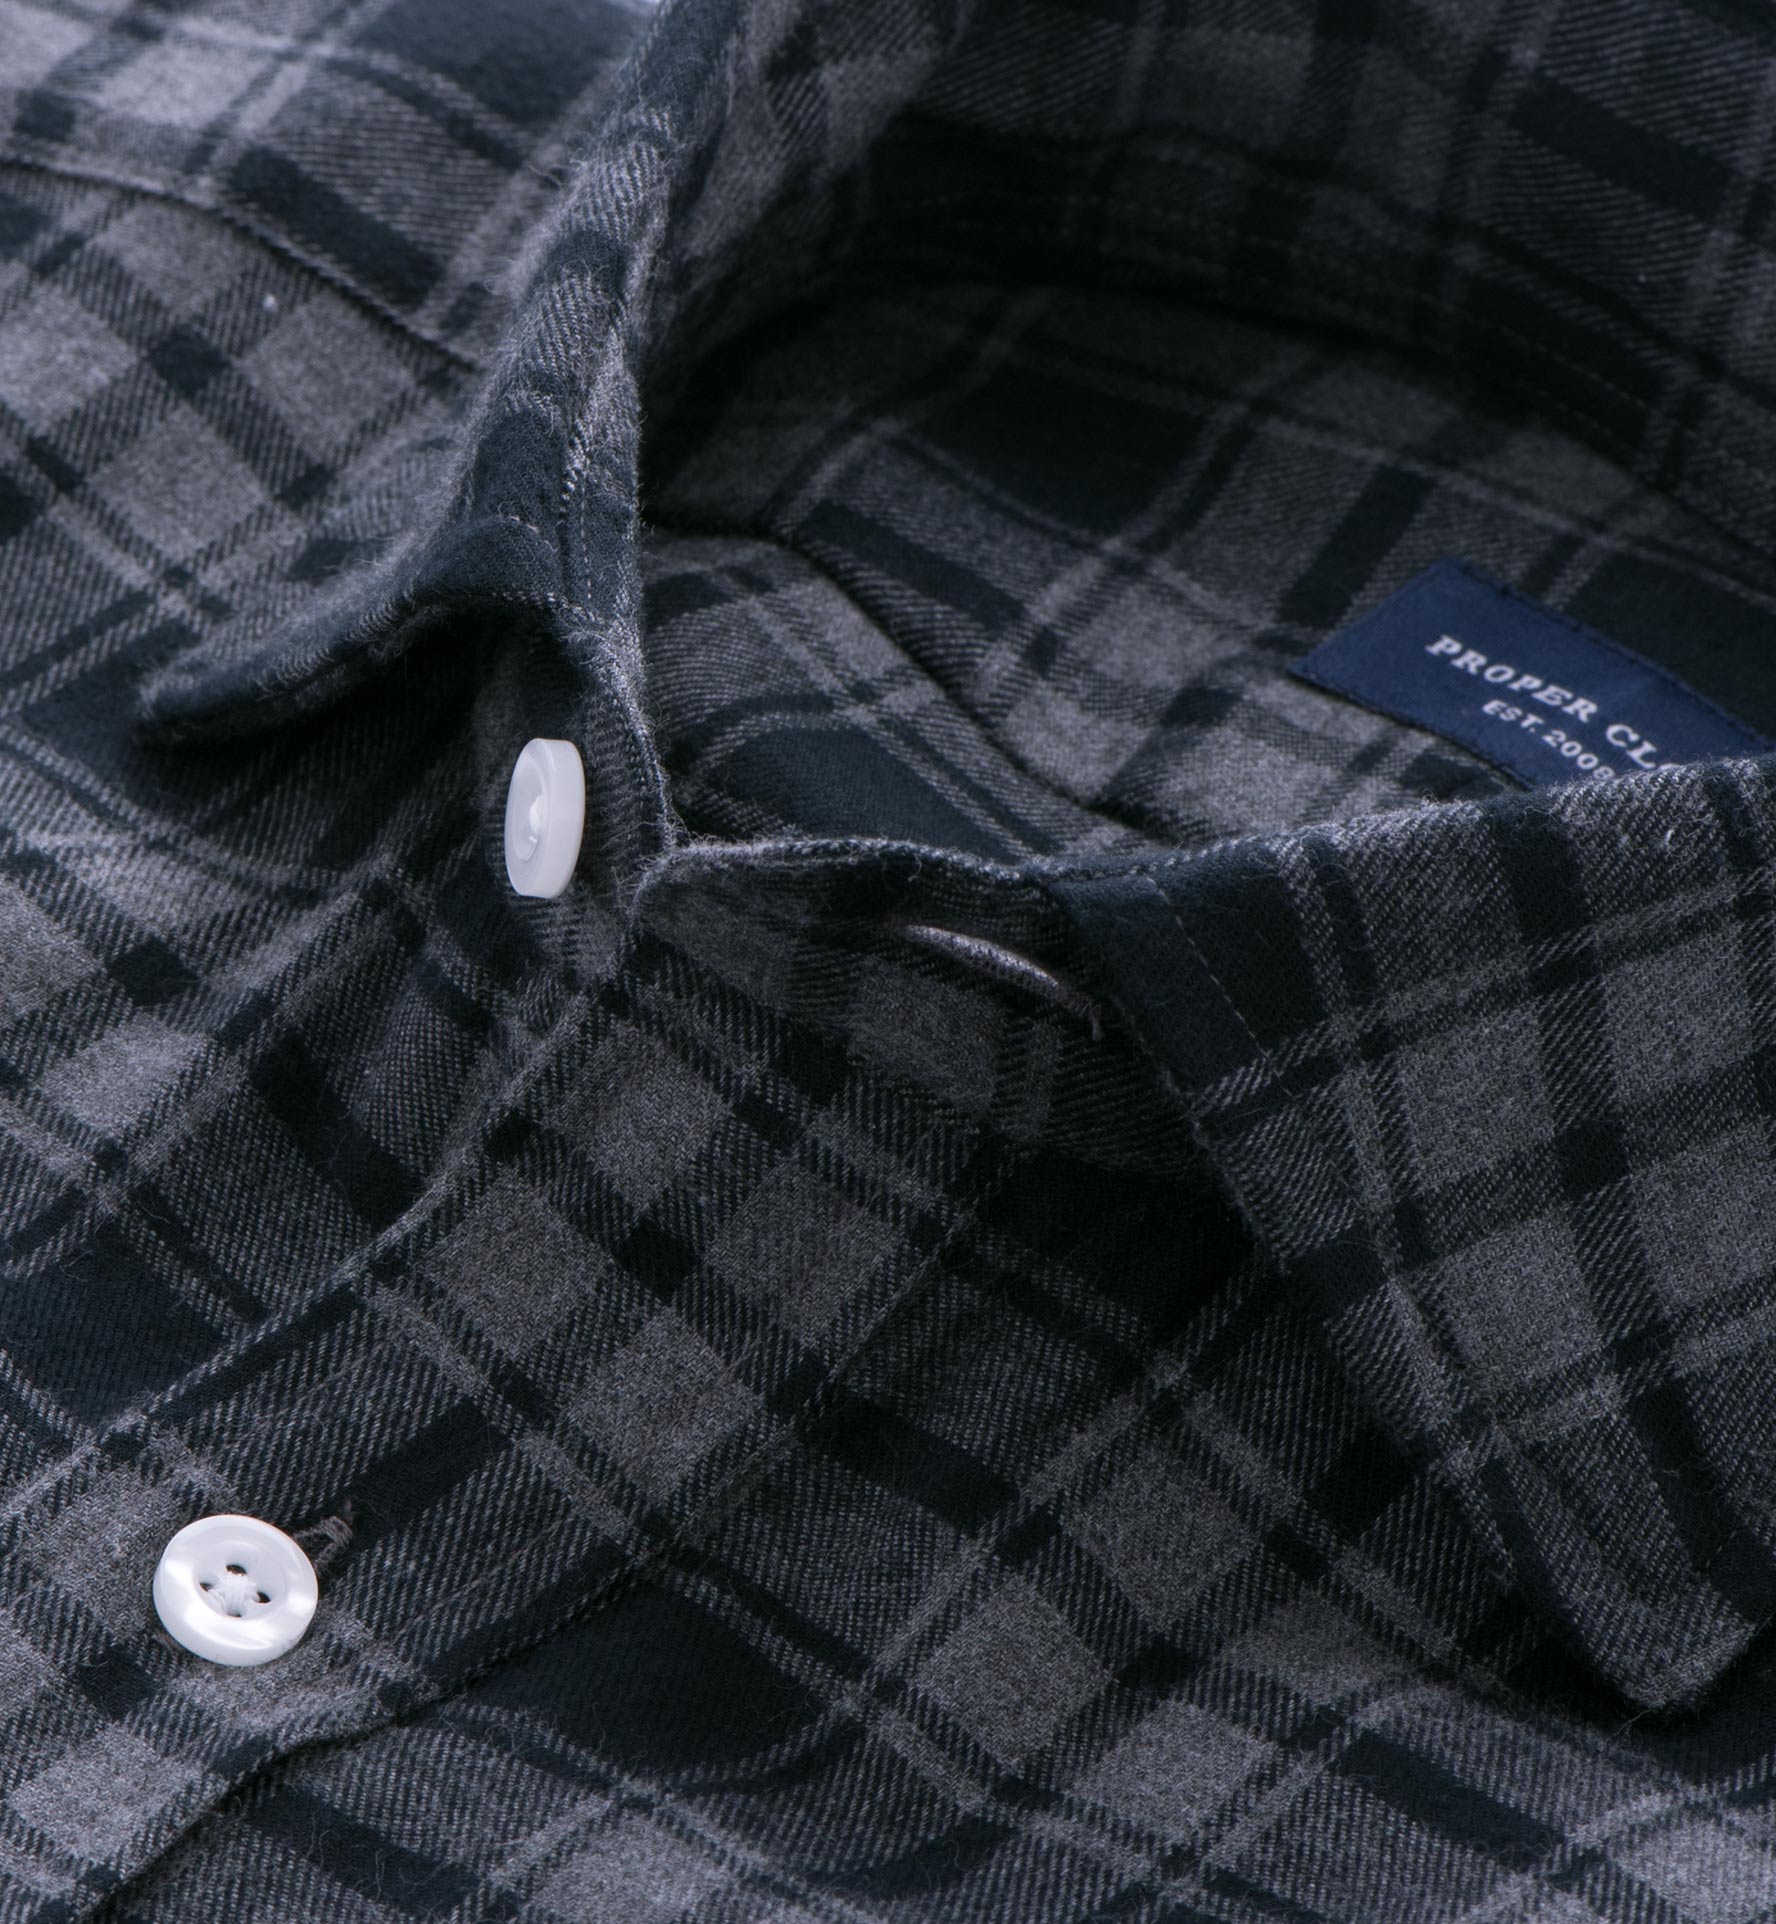 Grey Melange Plaid Flannel Men's Dress Shirt by Proper Cloth